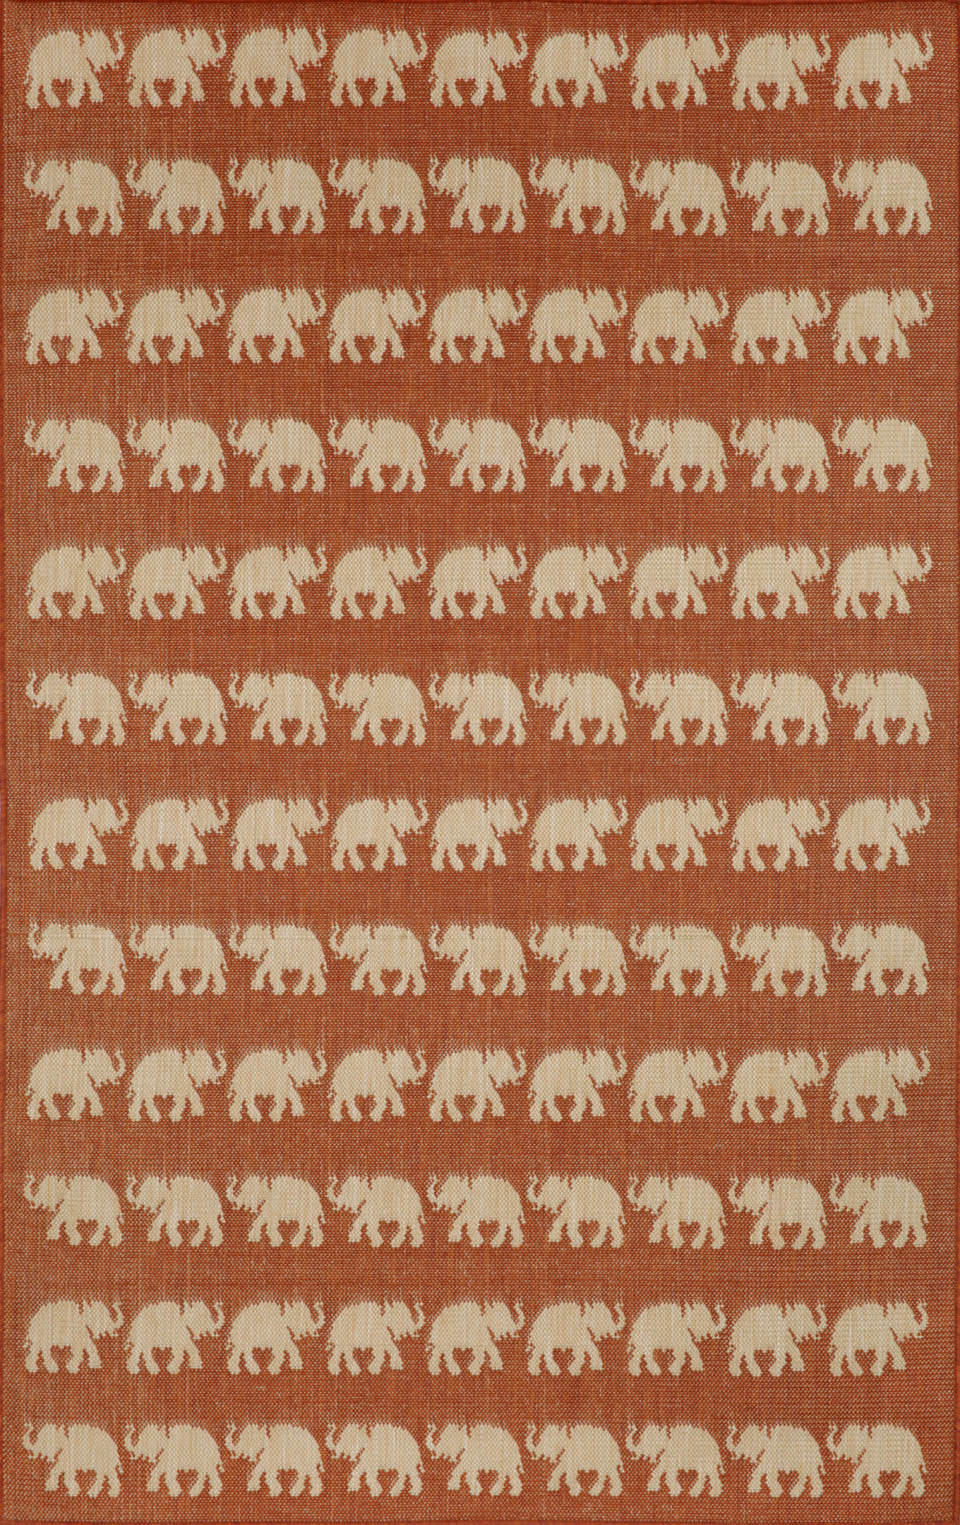 Trans Ocean Terrace Elephants Rust Area Rug main image